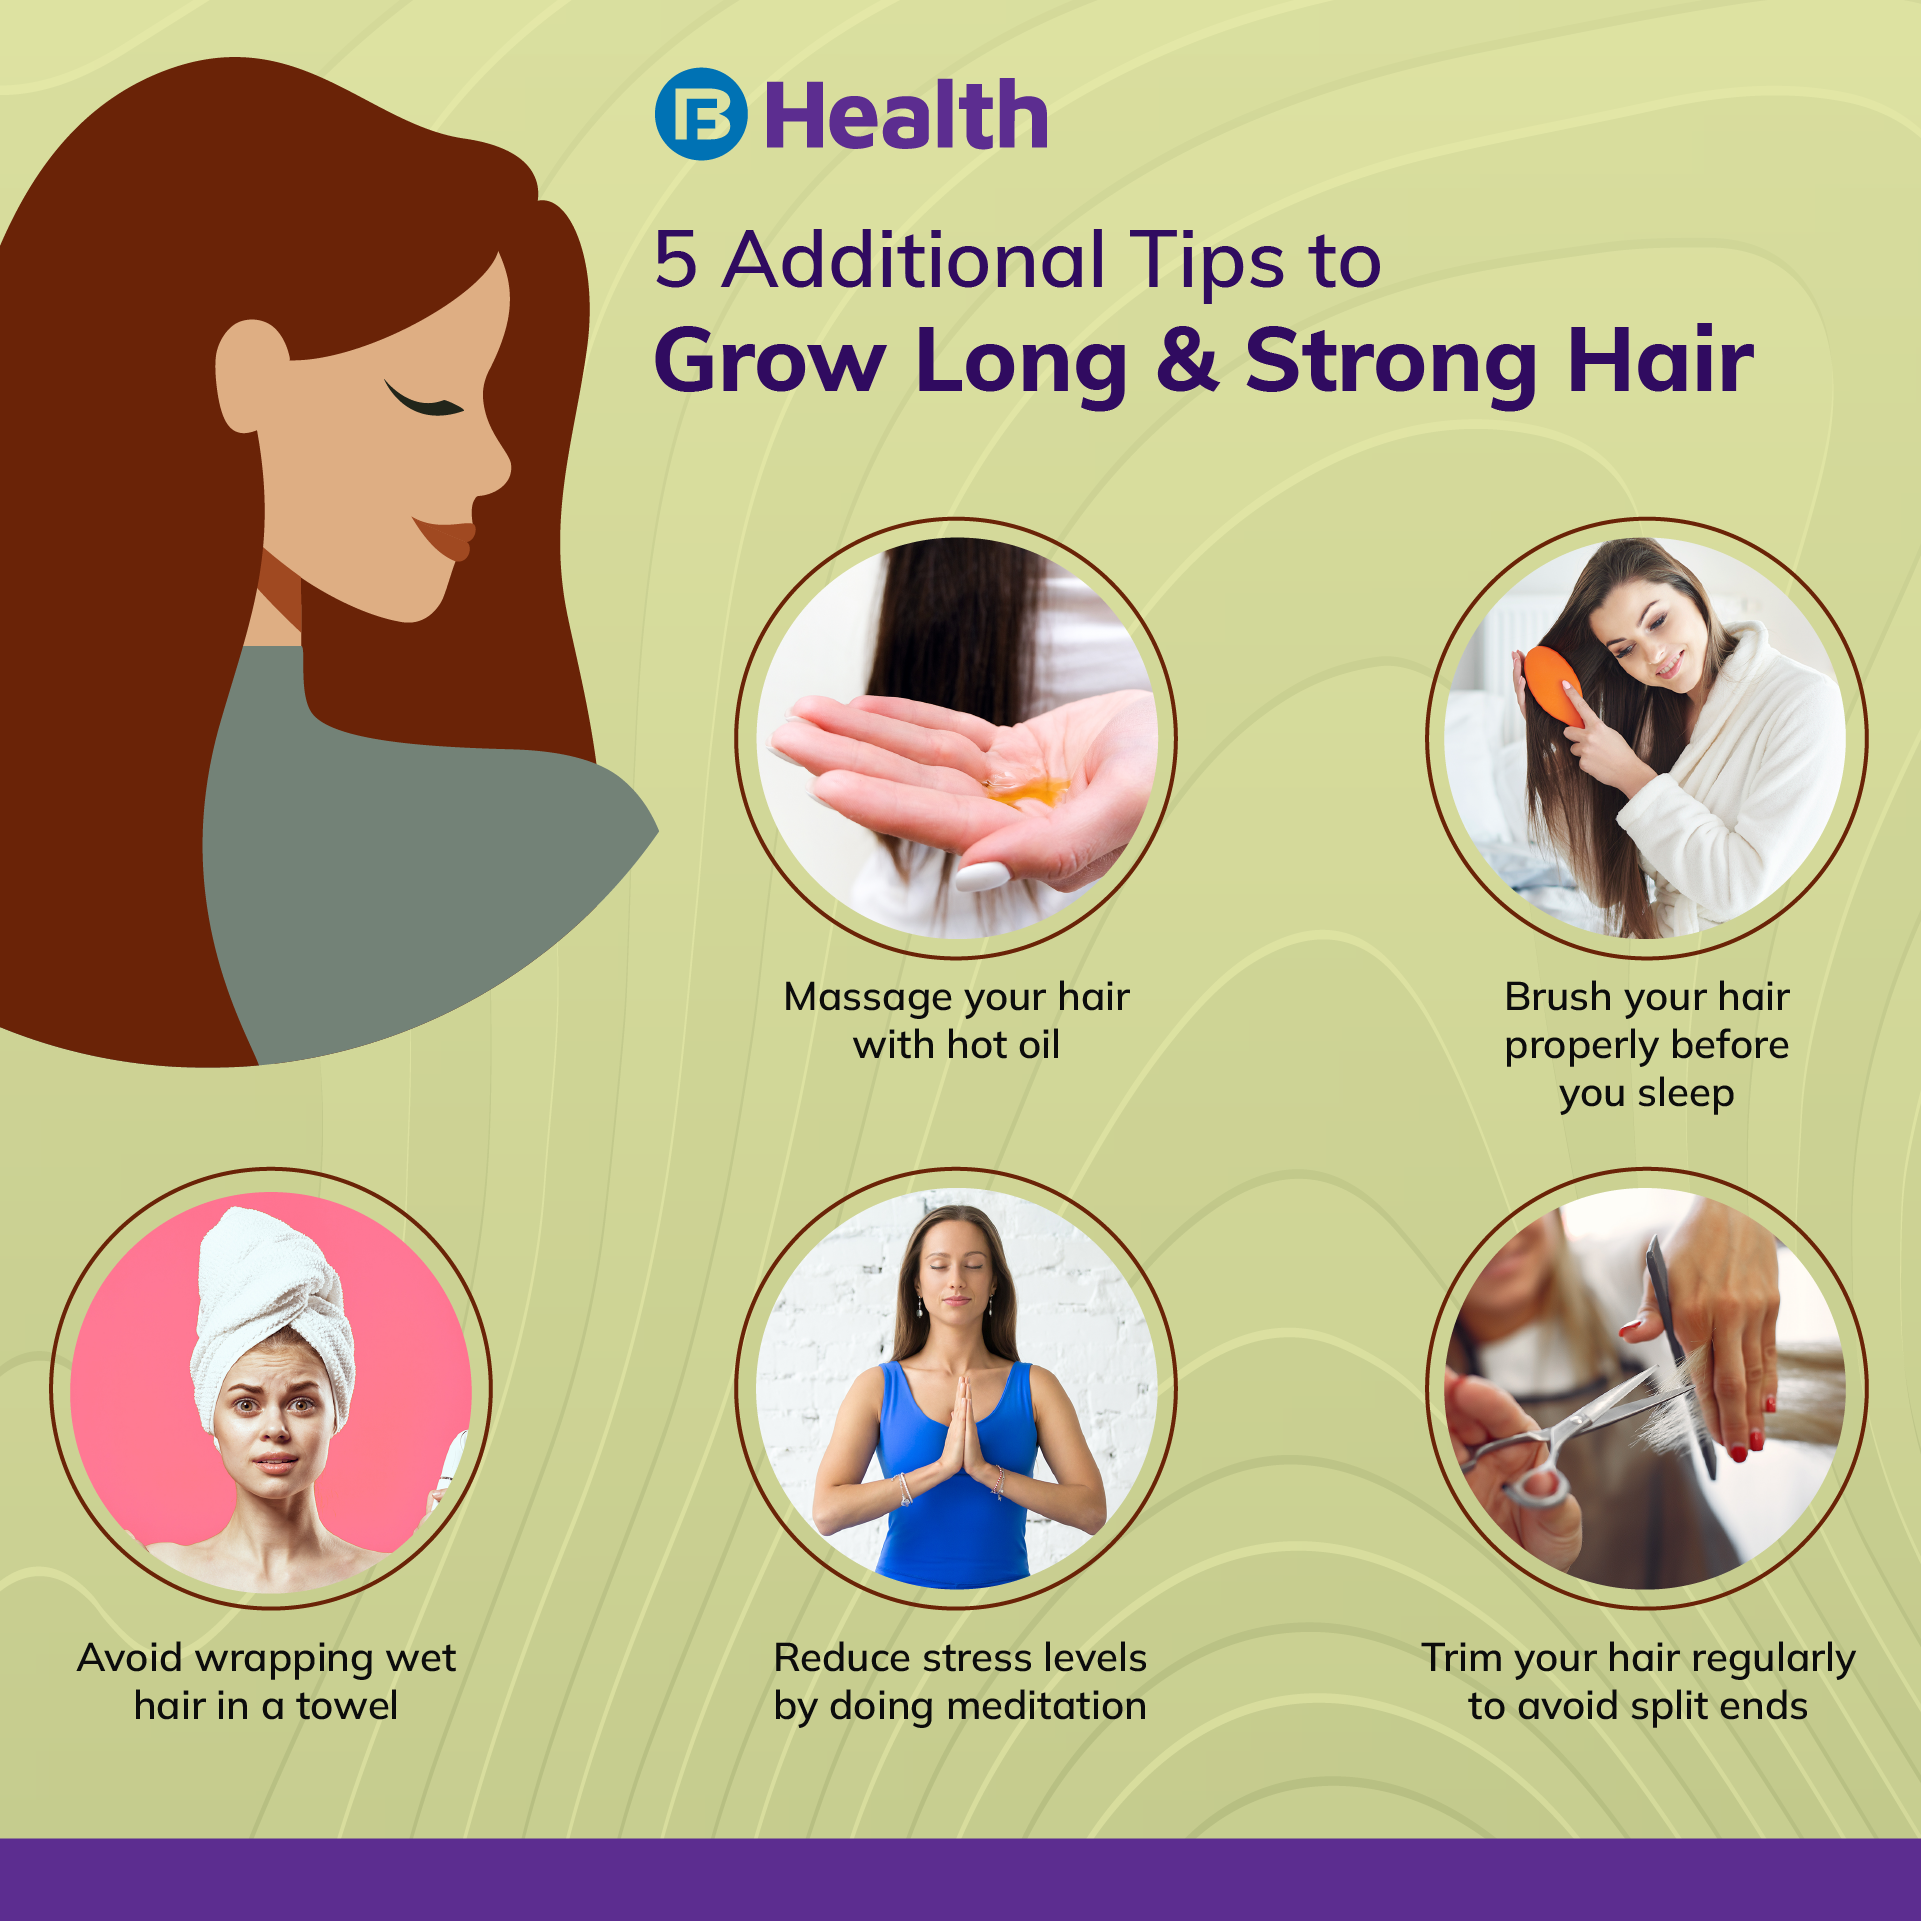 How To Increase Hair Volume Naturally - 10 Best Tips - Kama Ayurveda